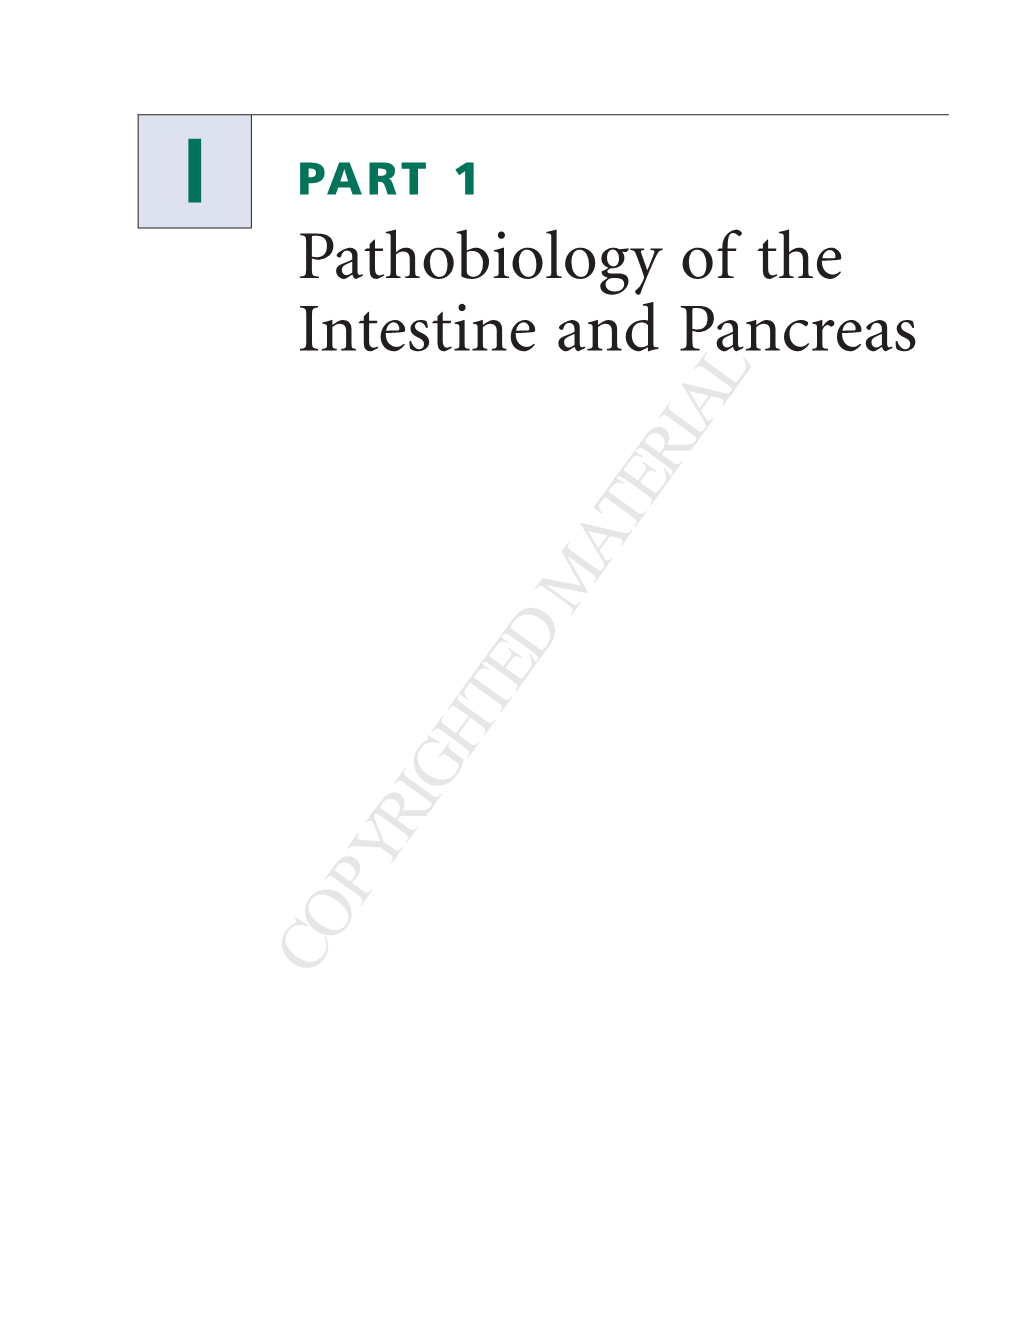 Pathobiology of the Intestine and Pancreas